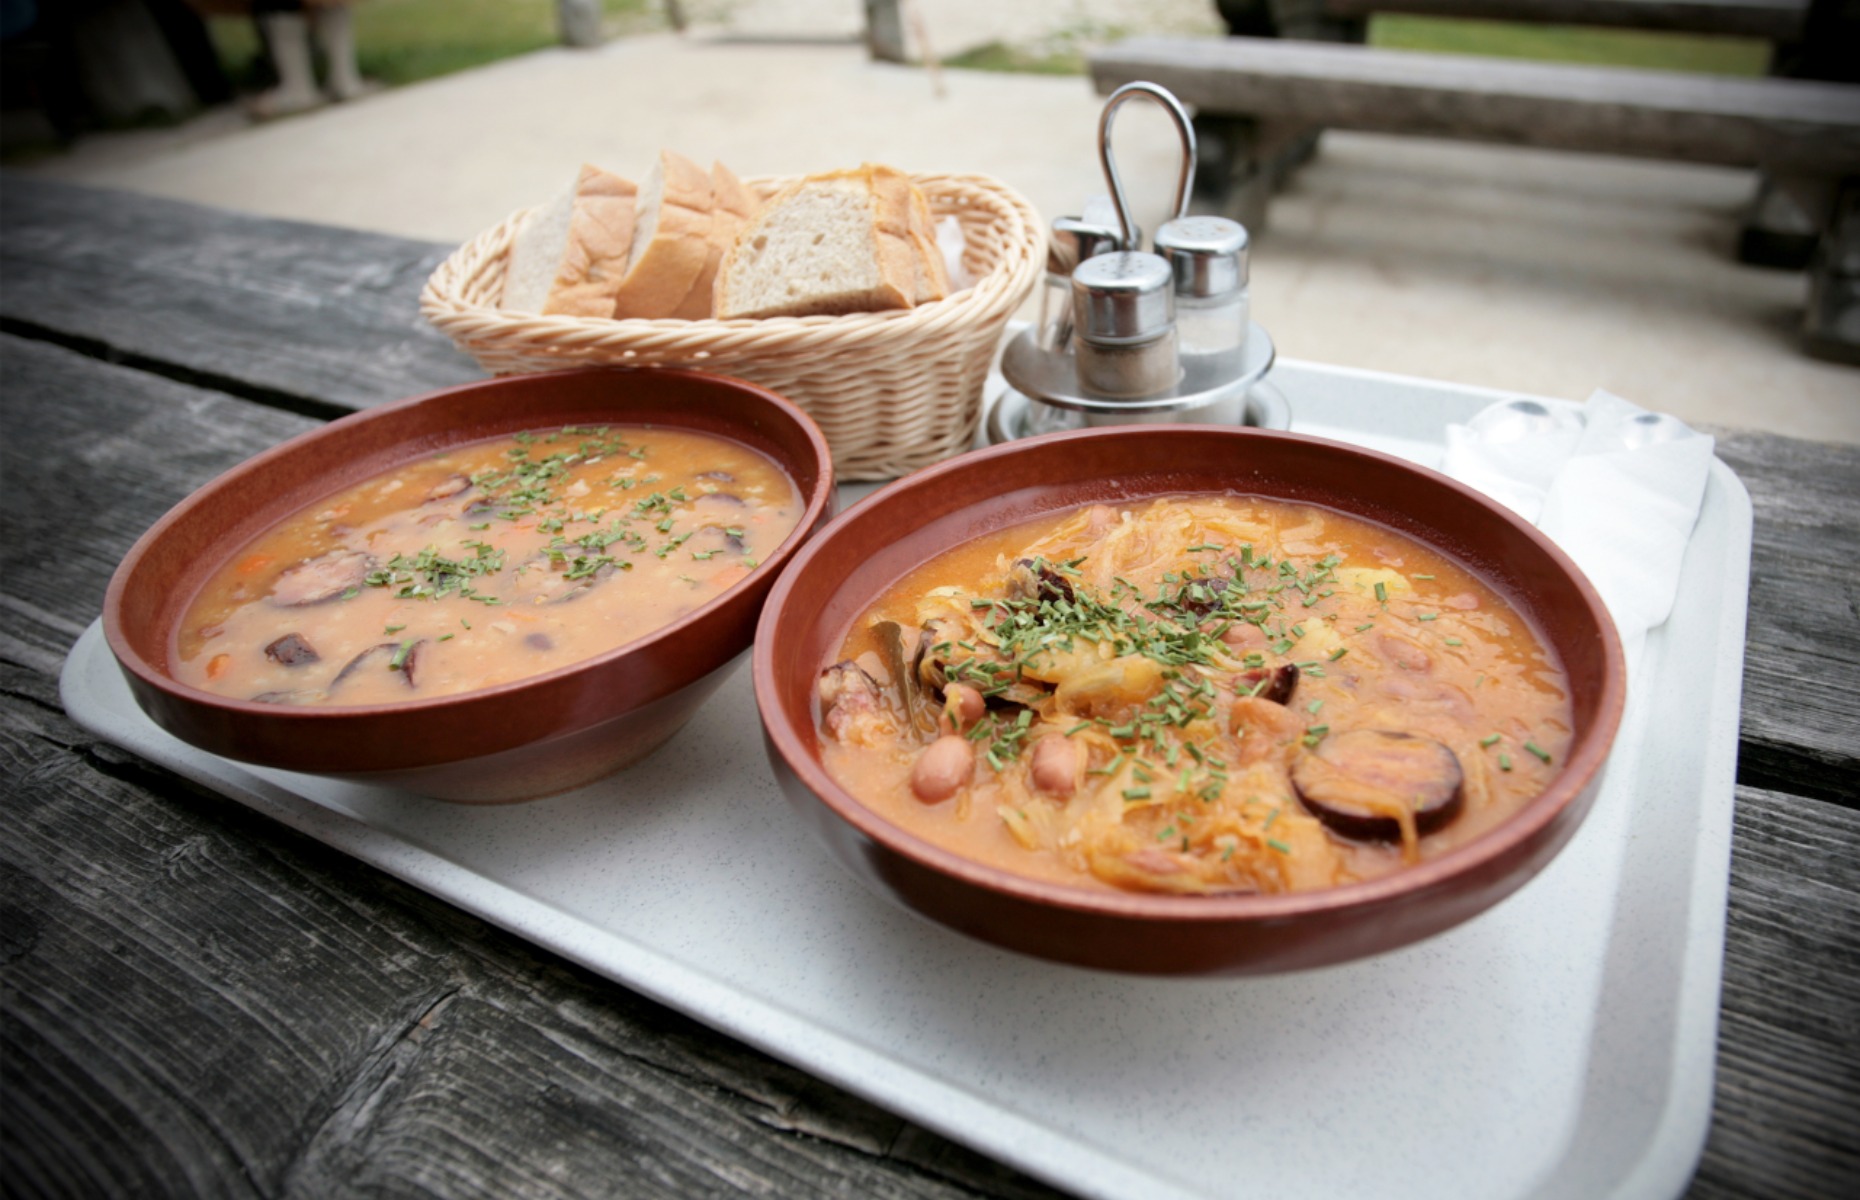 barley soup (Image: JRP Studio/Shutterstock)